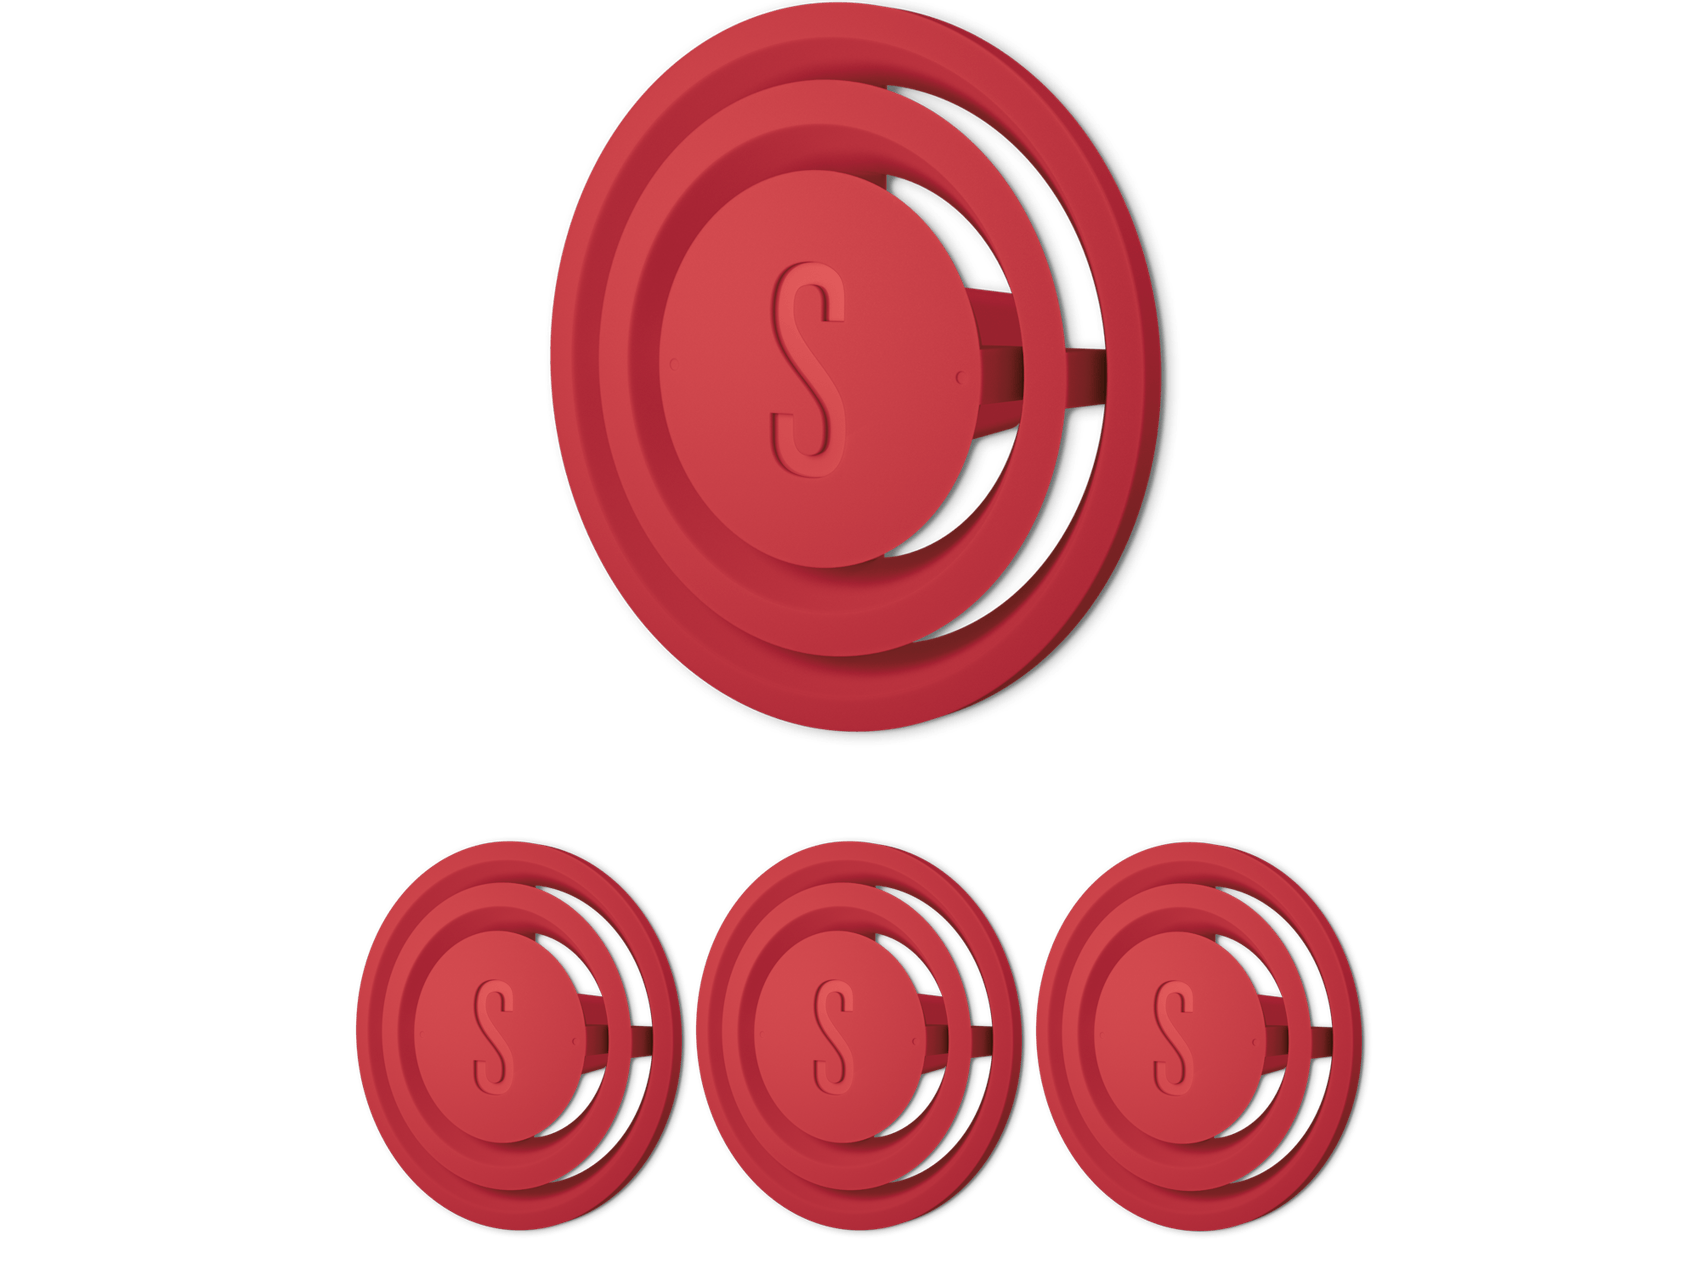 Red Jasmine fragrance pin pack of 4 by Stadler Form